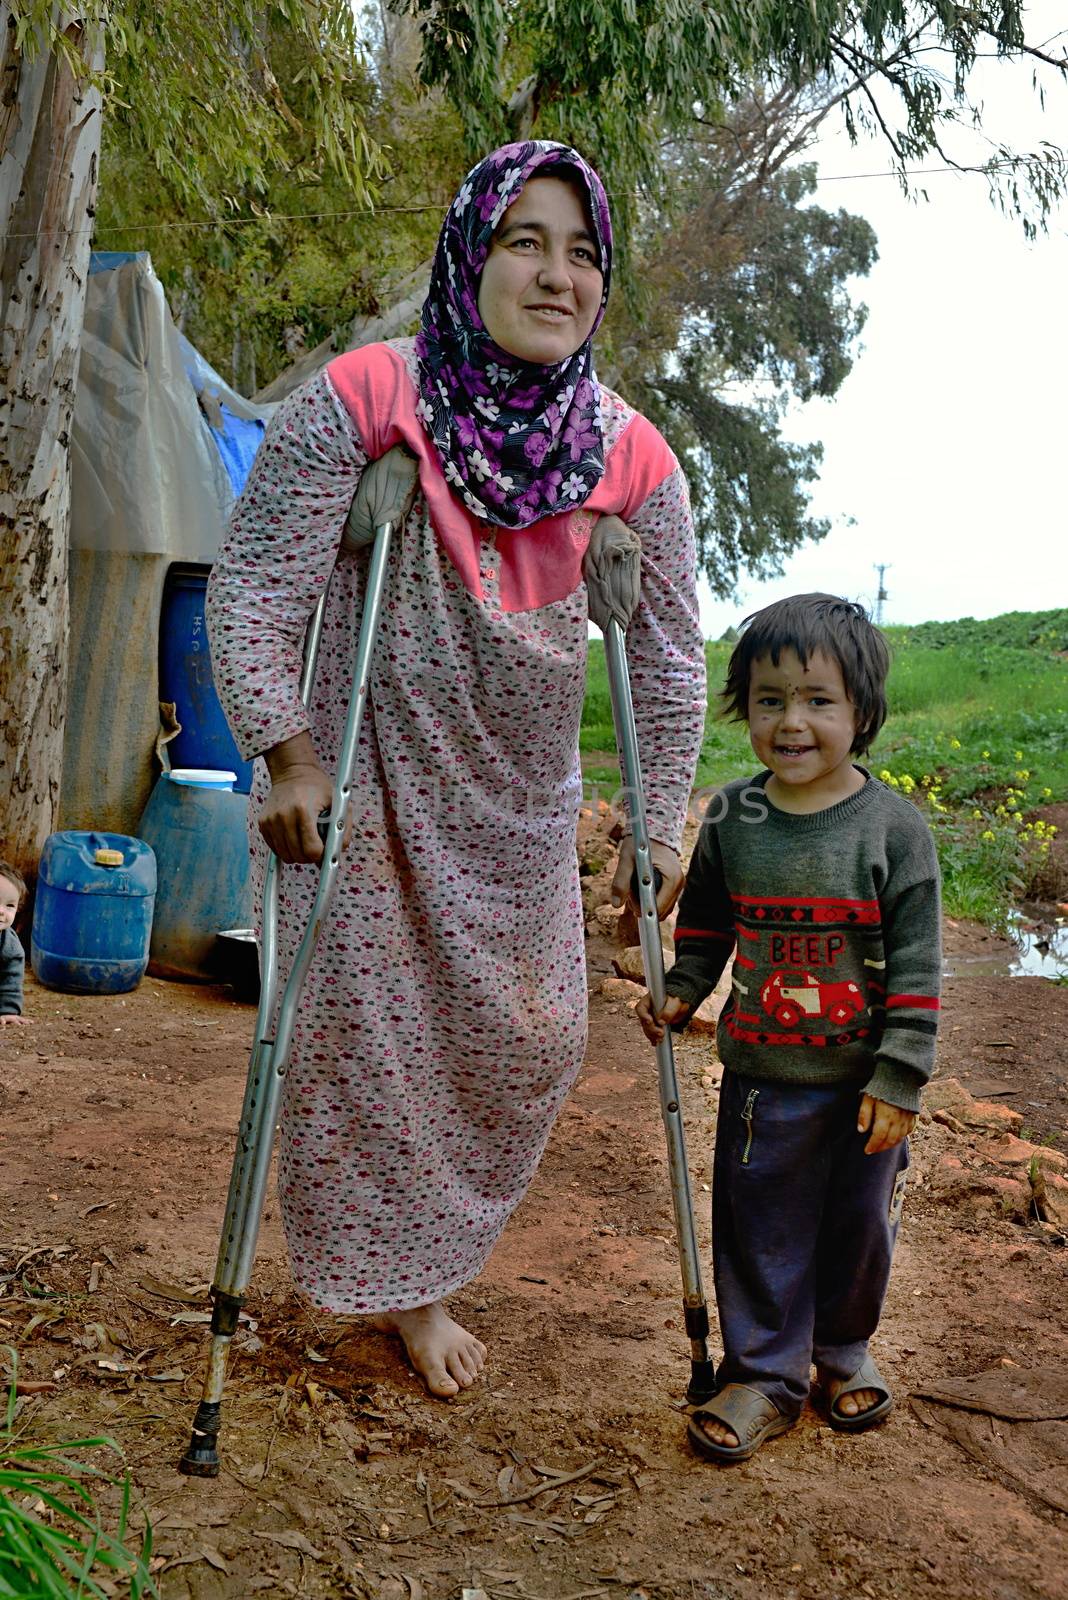 portrait of refugees living homeless in Turkey. 2.4.2015 Reyhanli, Turkey